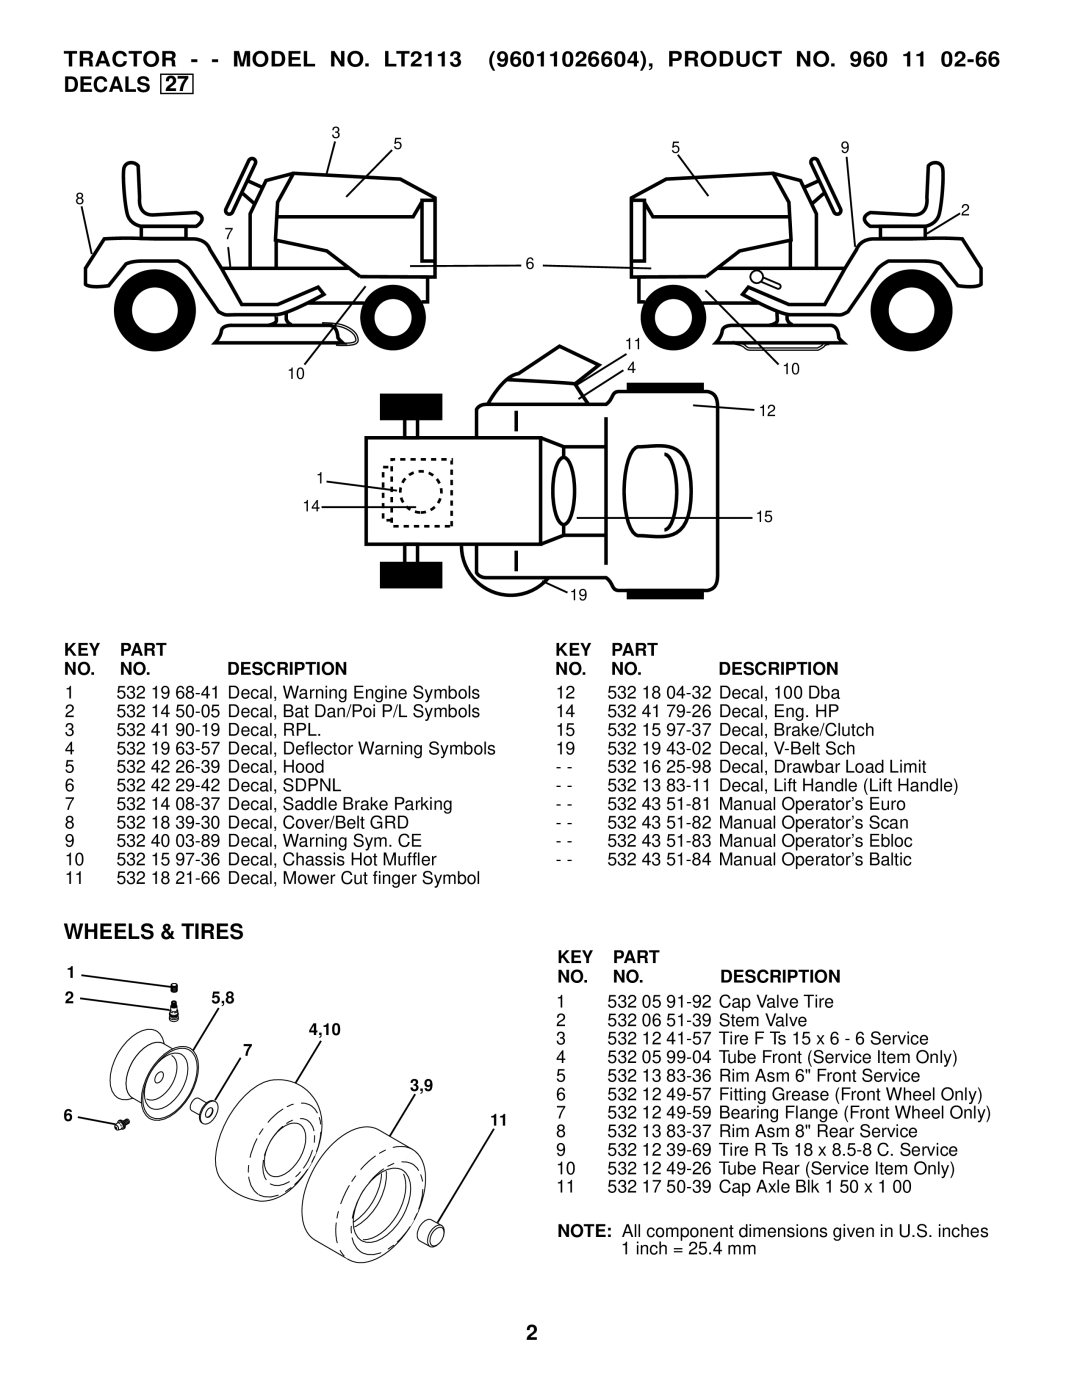 Jonsered LT2113 manual Wheels & Tires, Part, Description, 4,10 